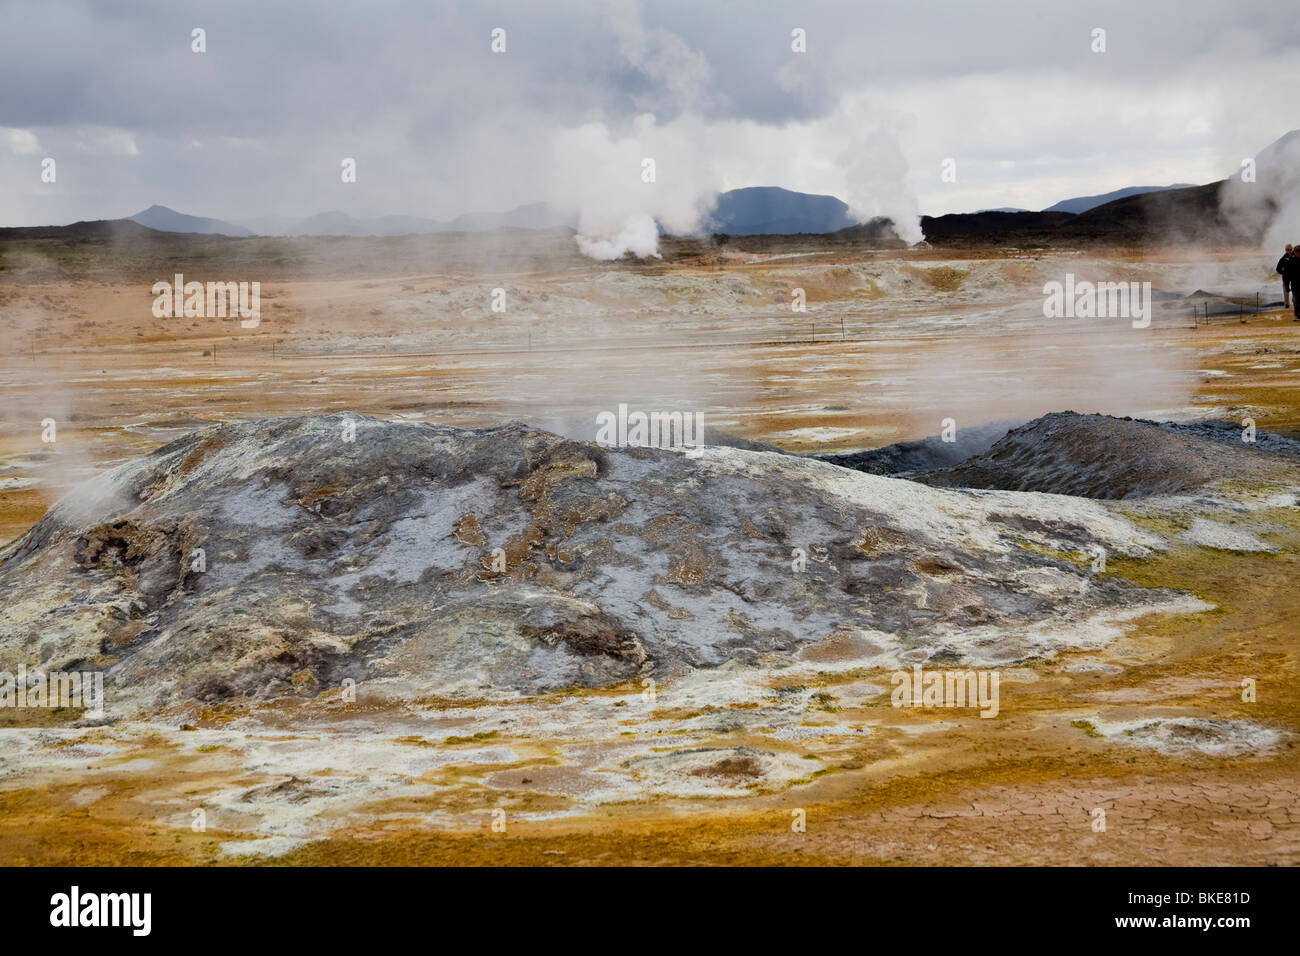 Sulphur deposits Hot springs Volcanic field Hverarönd Iceland Stock Photo